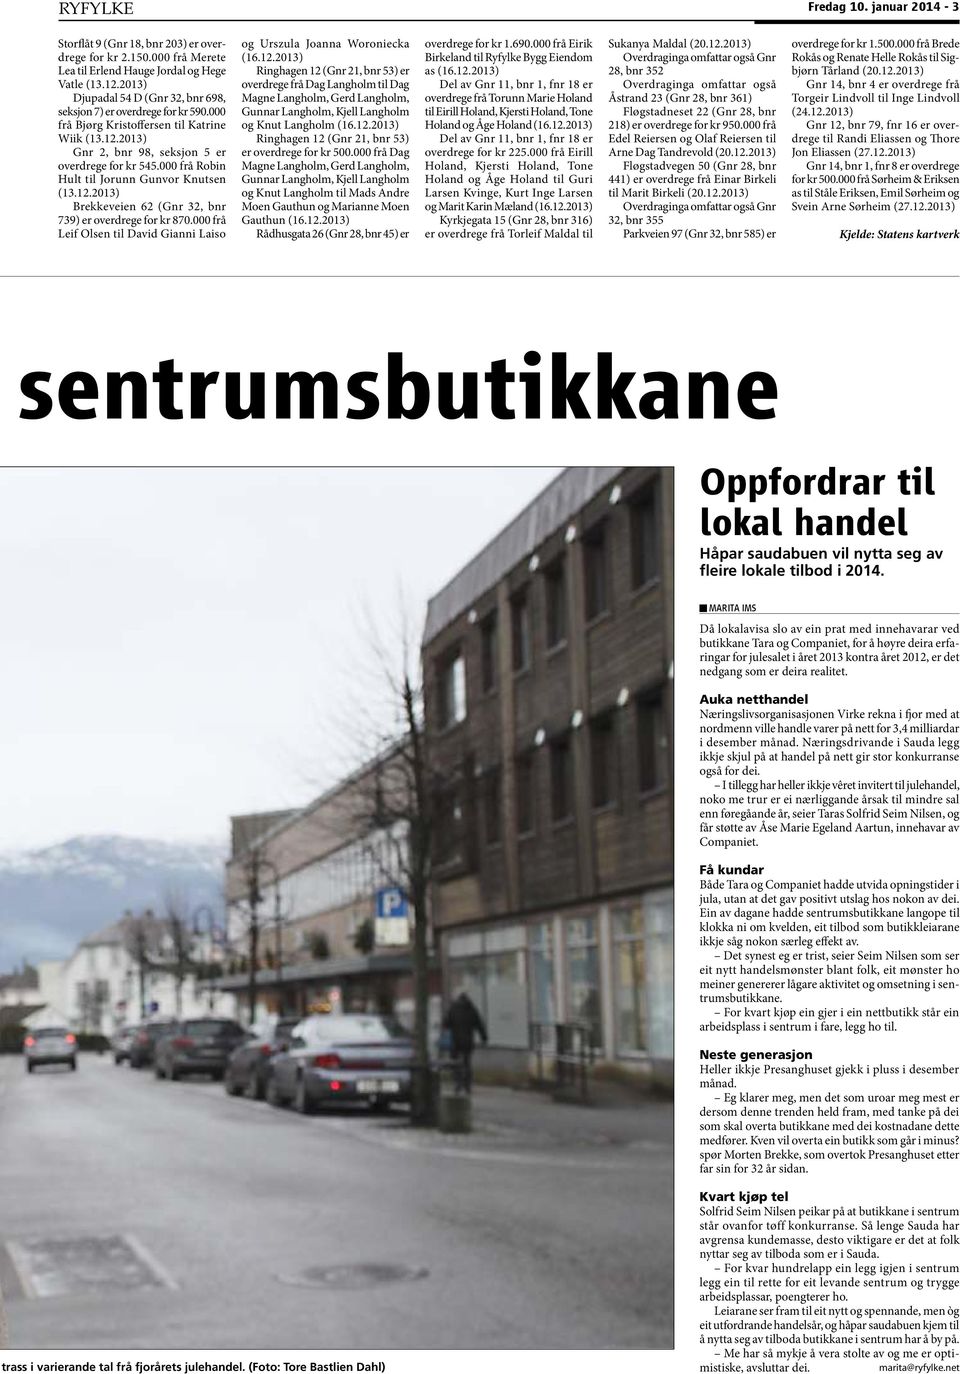 000 frå Robin Hult til Jorunn Gunvor Knutsen (13.12.